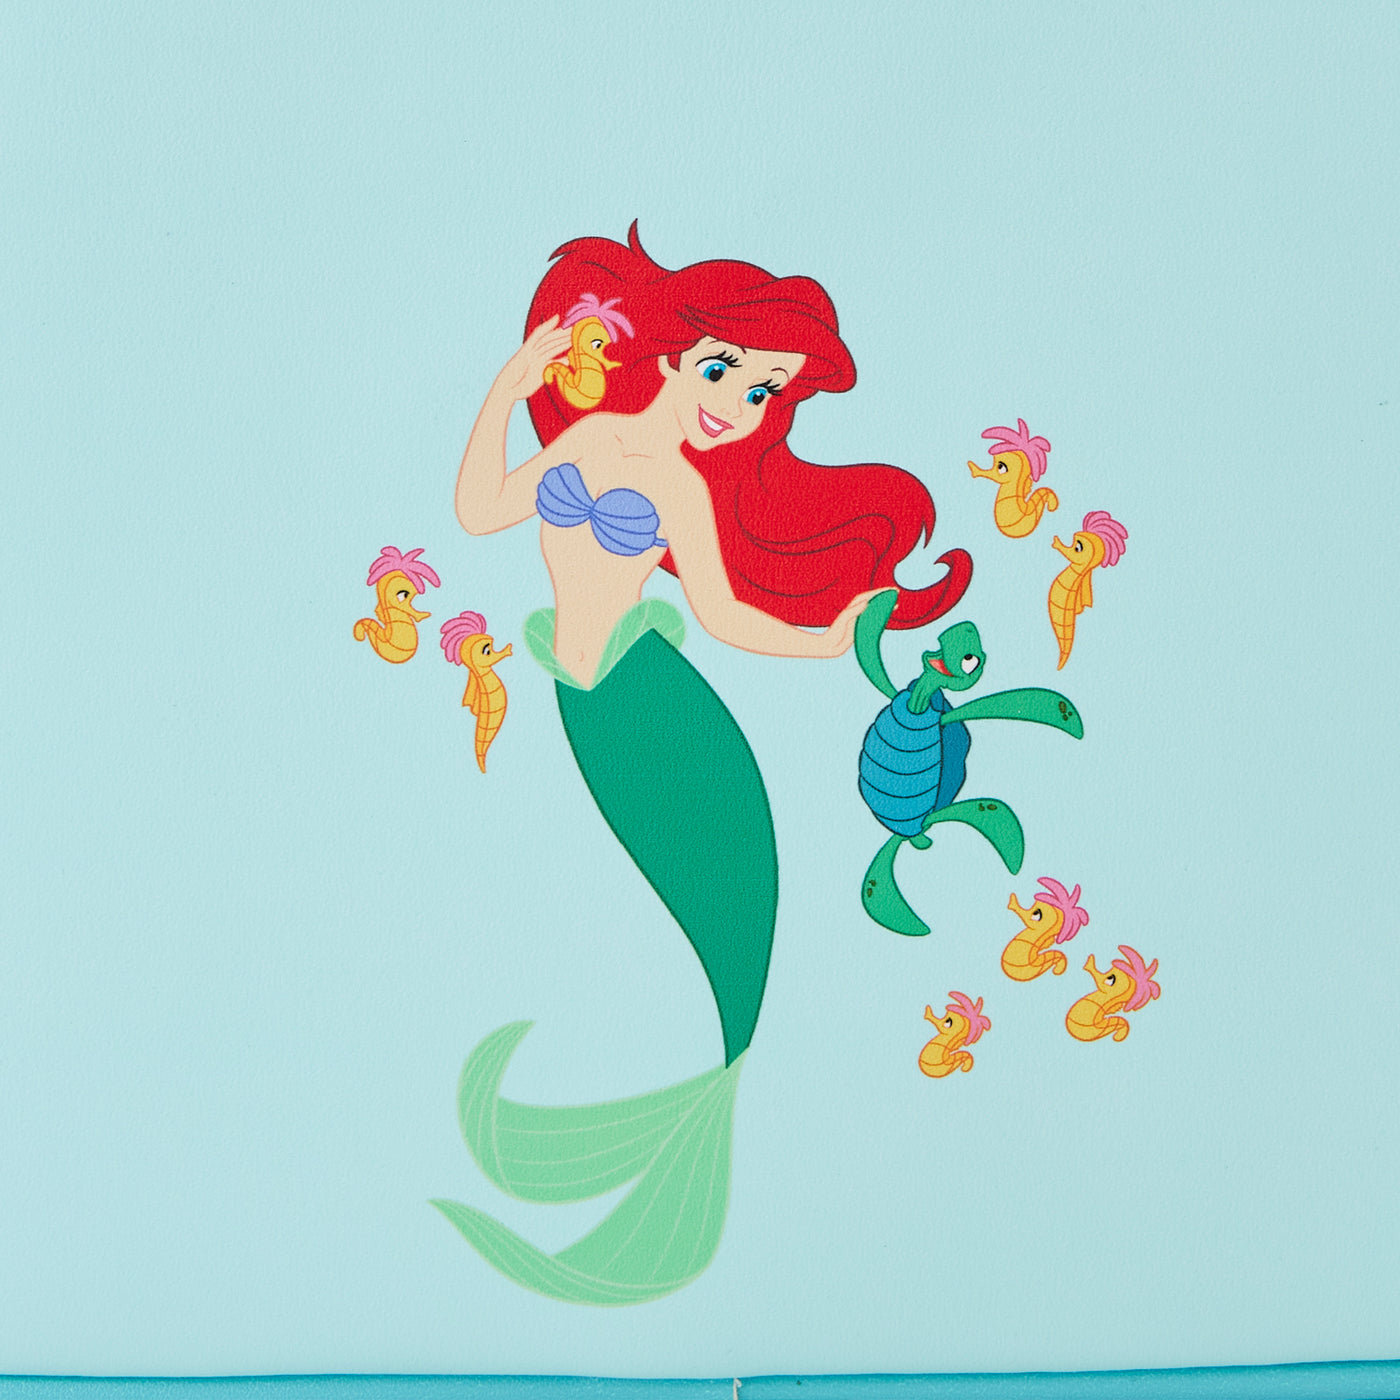 Disney The Little Mermaid Ariel Princess Lenticular Series Mini Backpack